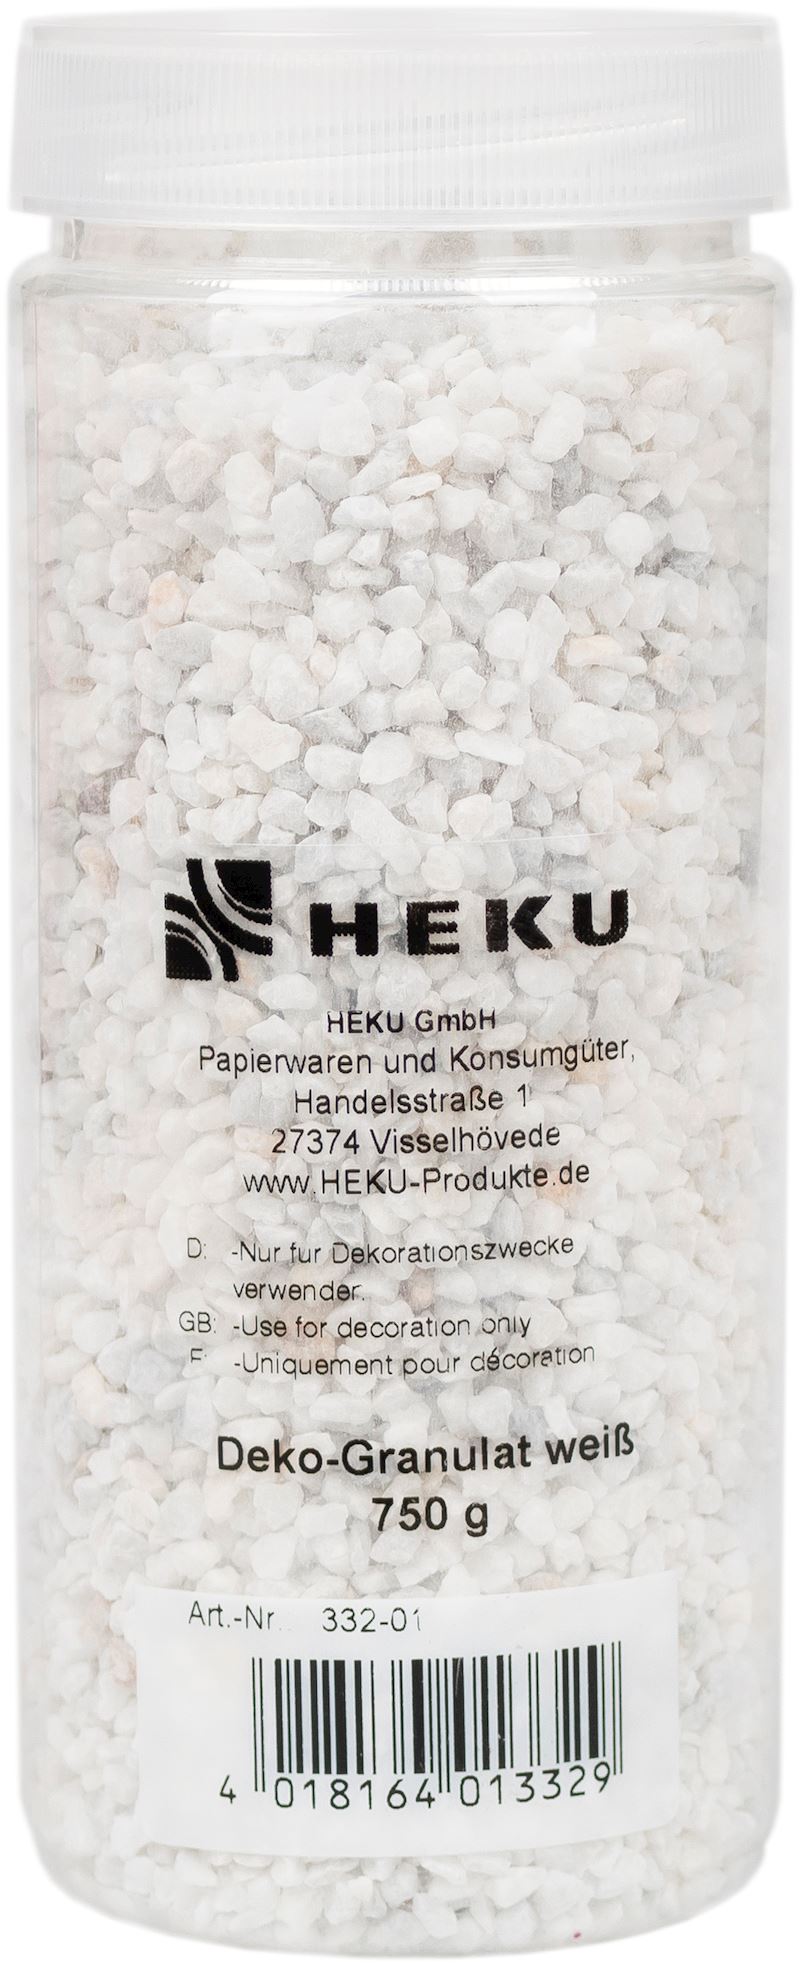 Deko-Granulat in Dose 2-3 mm, 750 g, weiss